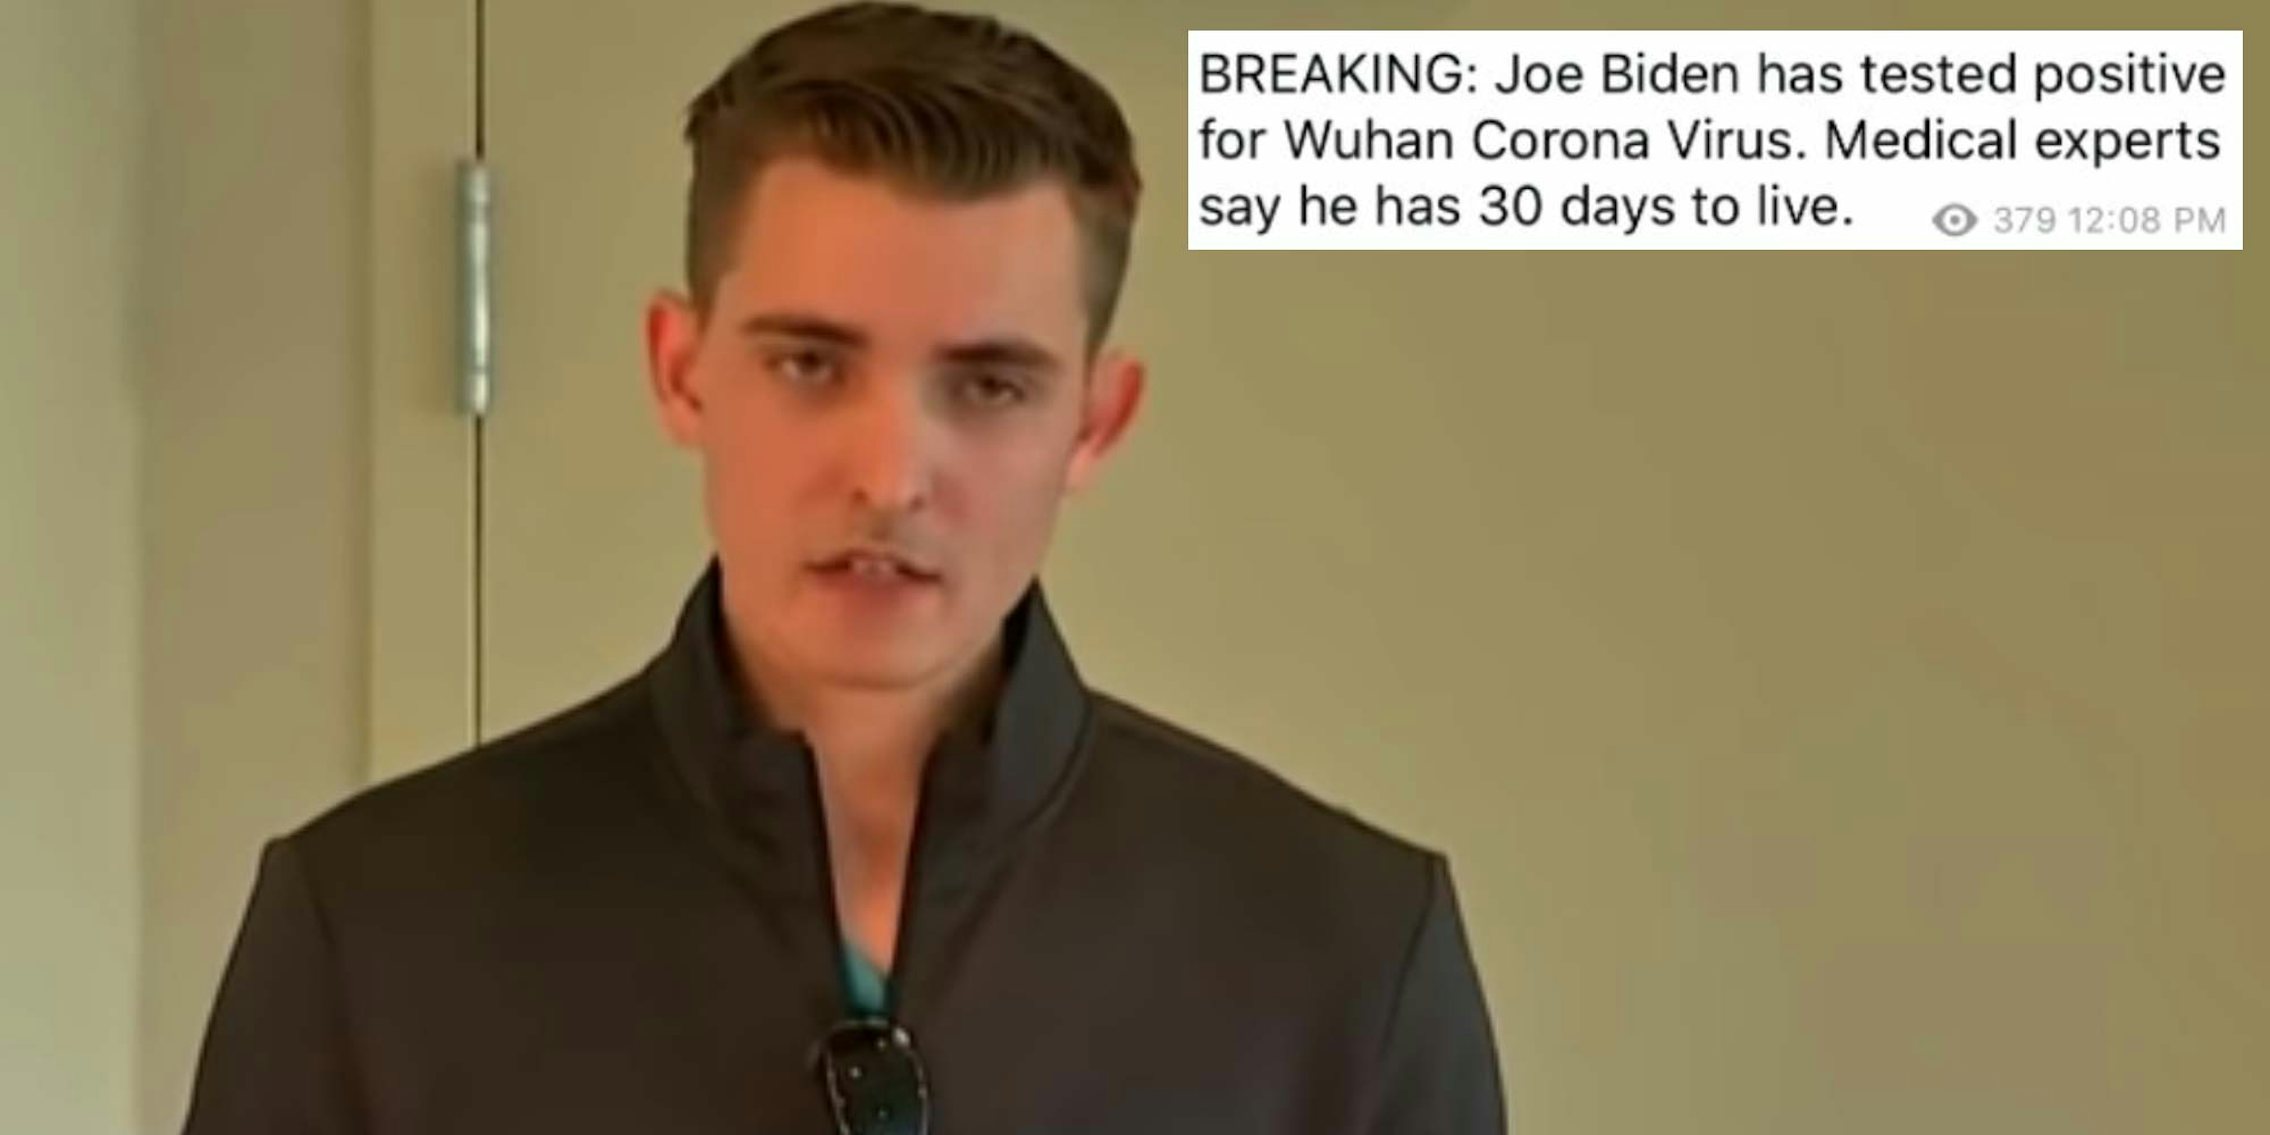 Jacob Wohl next to a fake messaging alleging Joe Biden has coronavirus